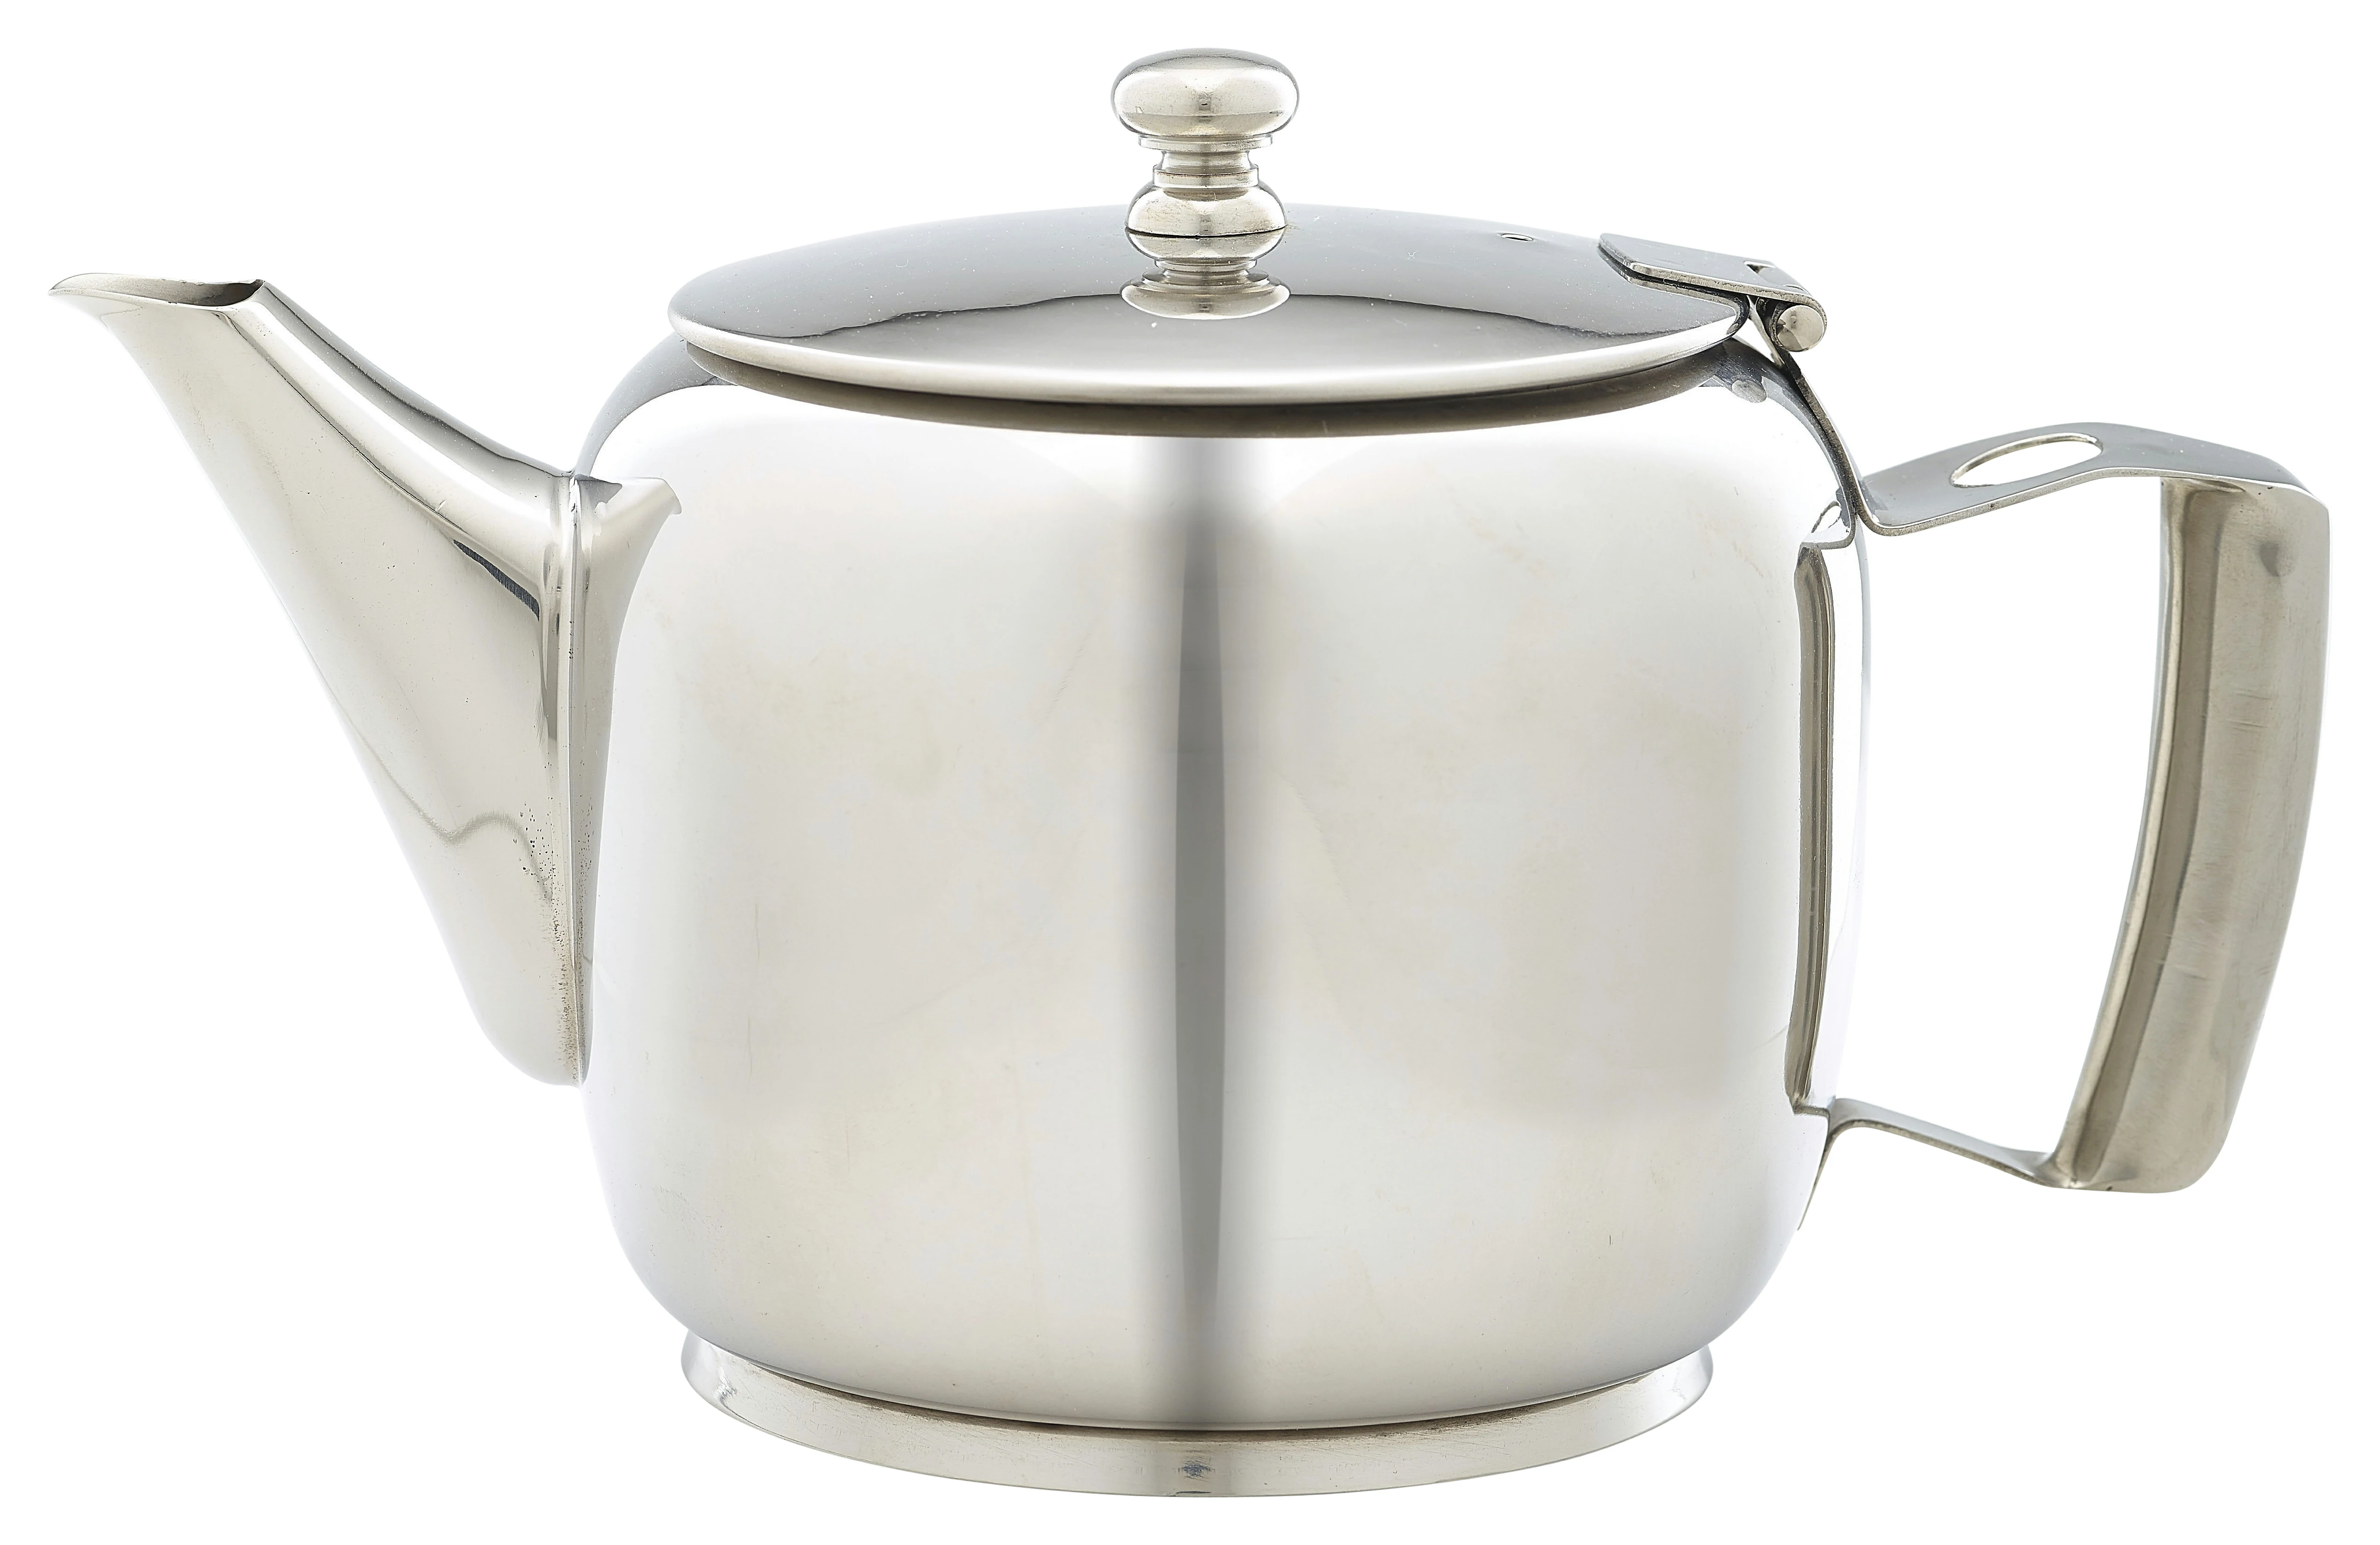 GenWare Stainless Steel Premier Teapot 120cl/40oz